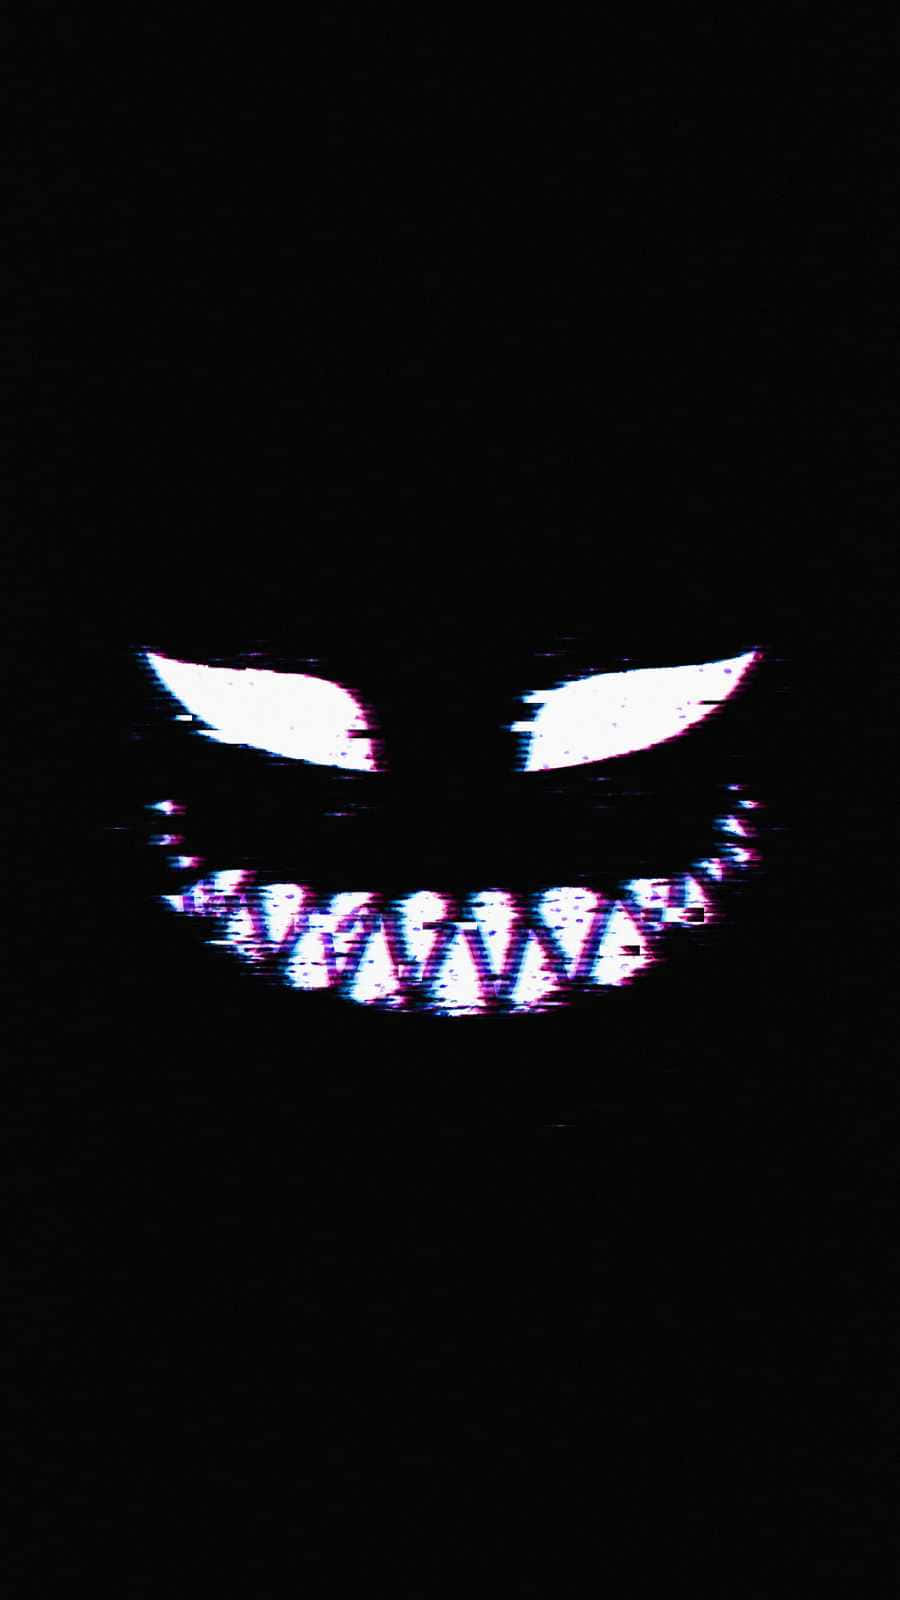 Black Creepy Smile Background